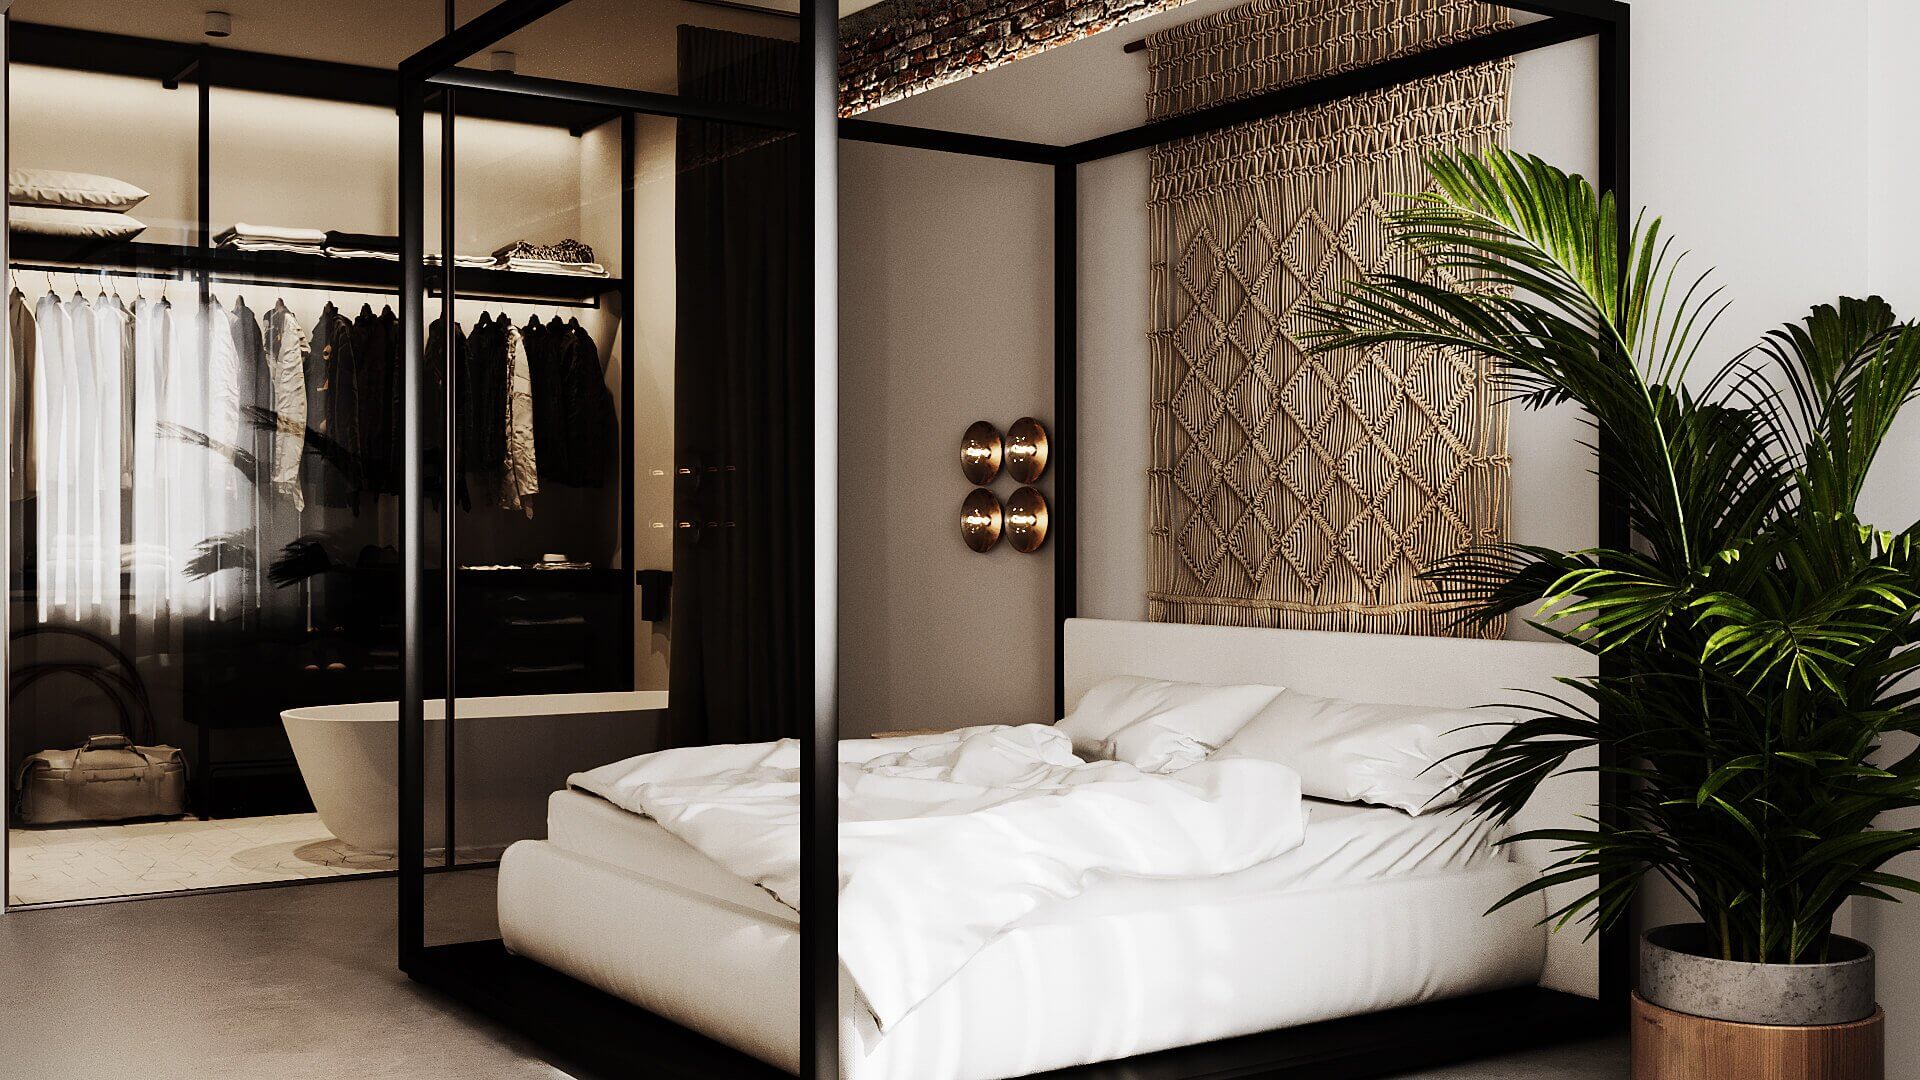 Oasis Apartment bedroom wardrobe open led light - cgi visualization